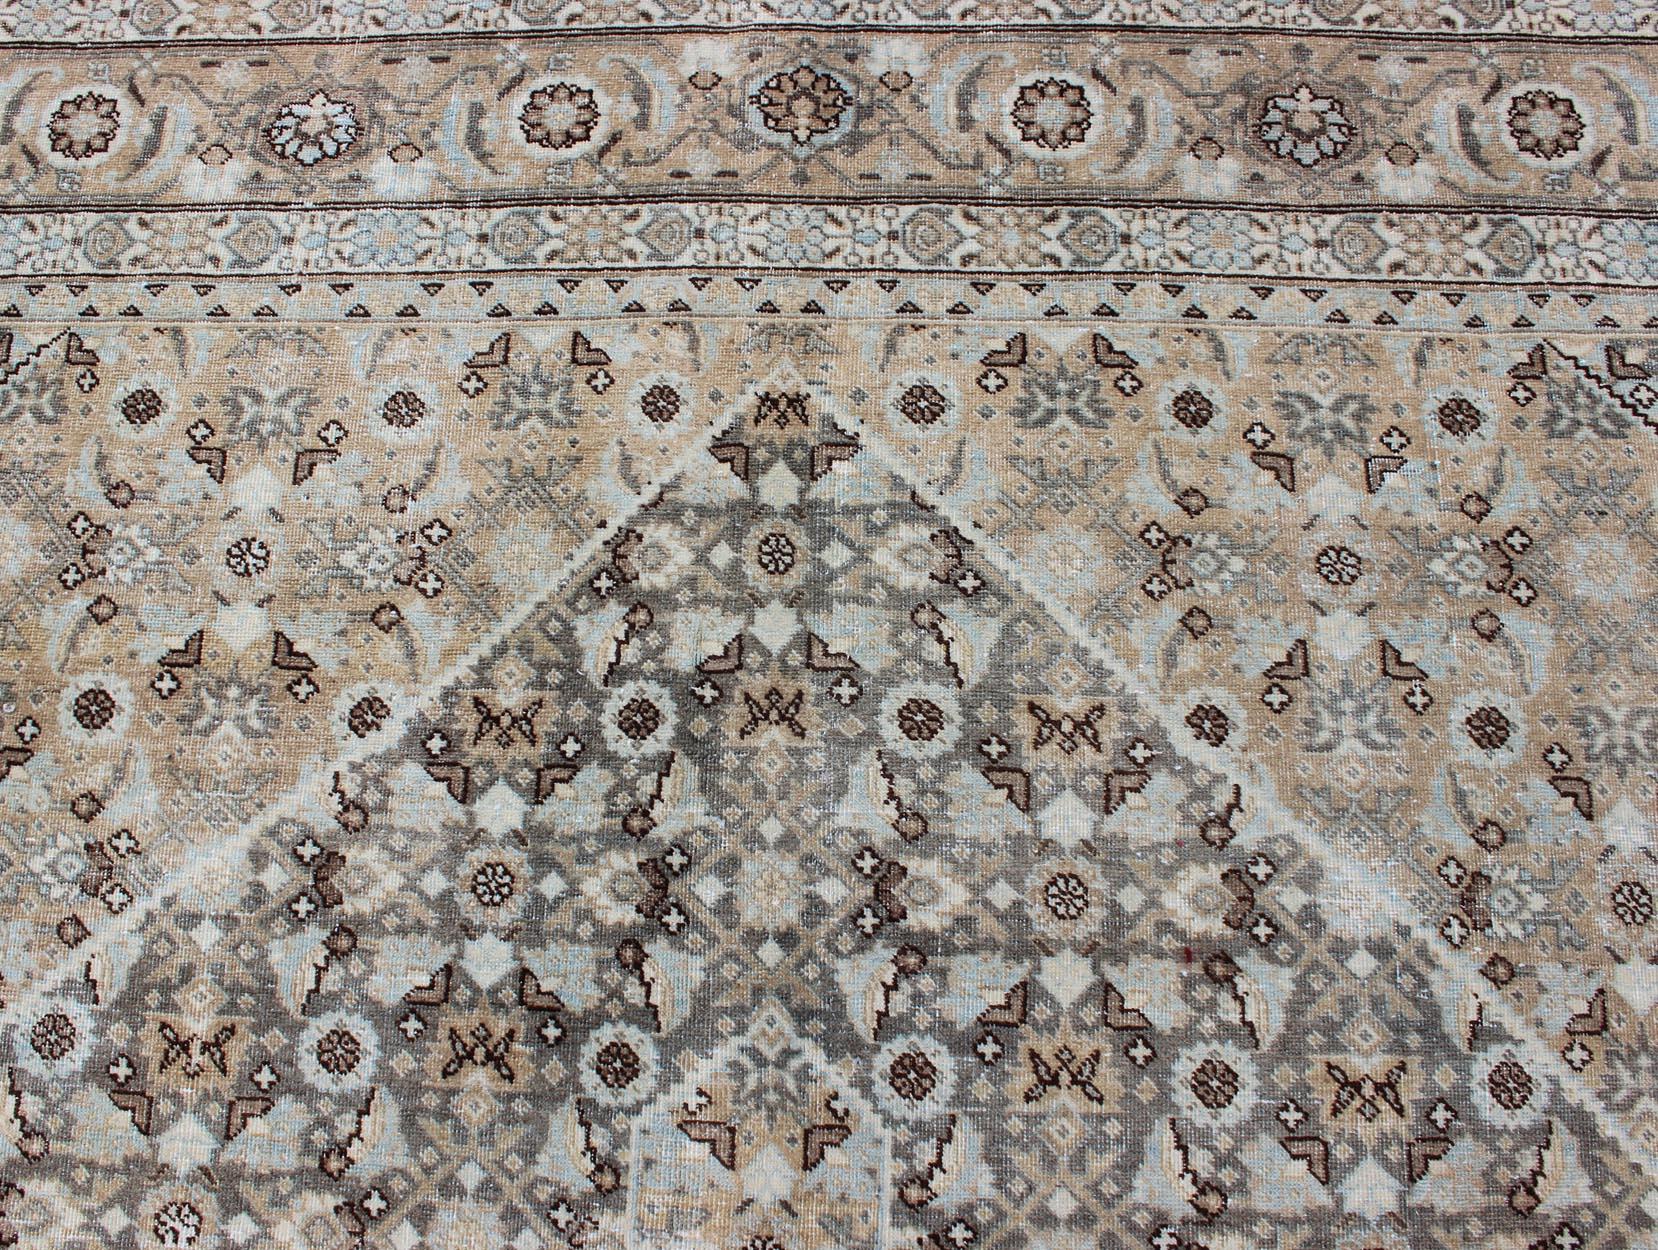 Antique Persian Tabriz Carpet with Geometric Diamond Design in Earth Tones For Sale 2